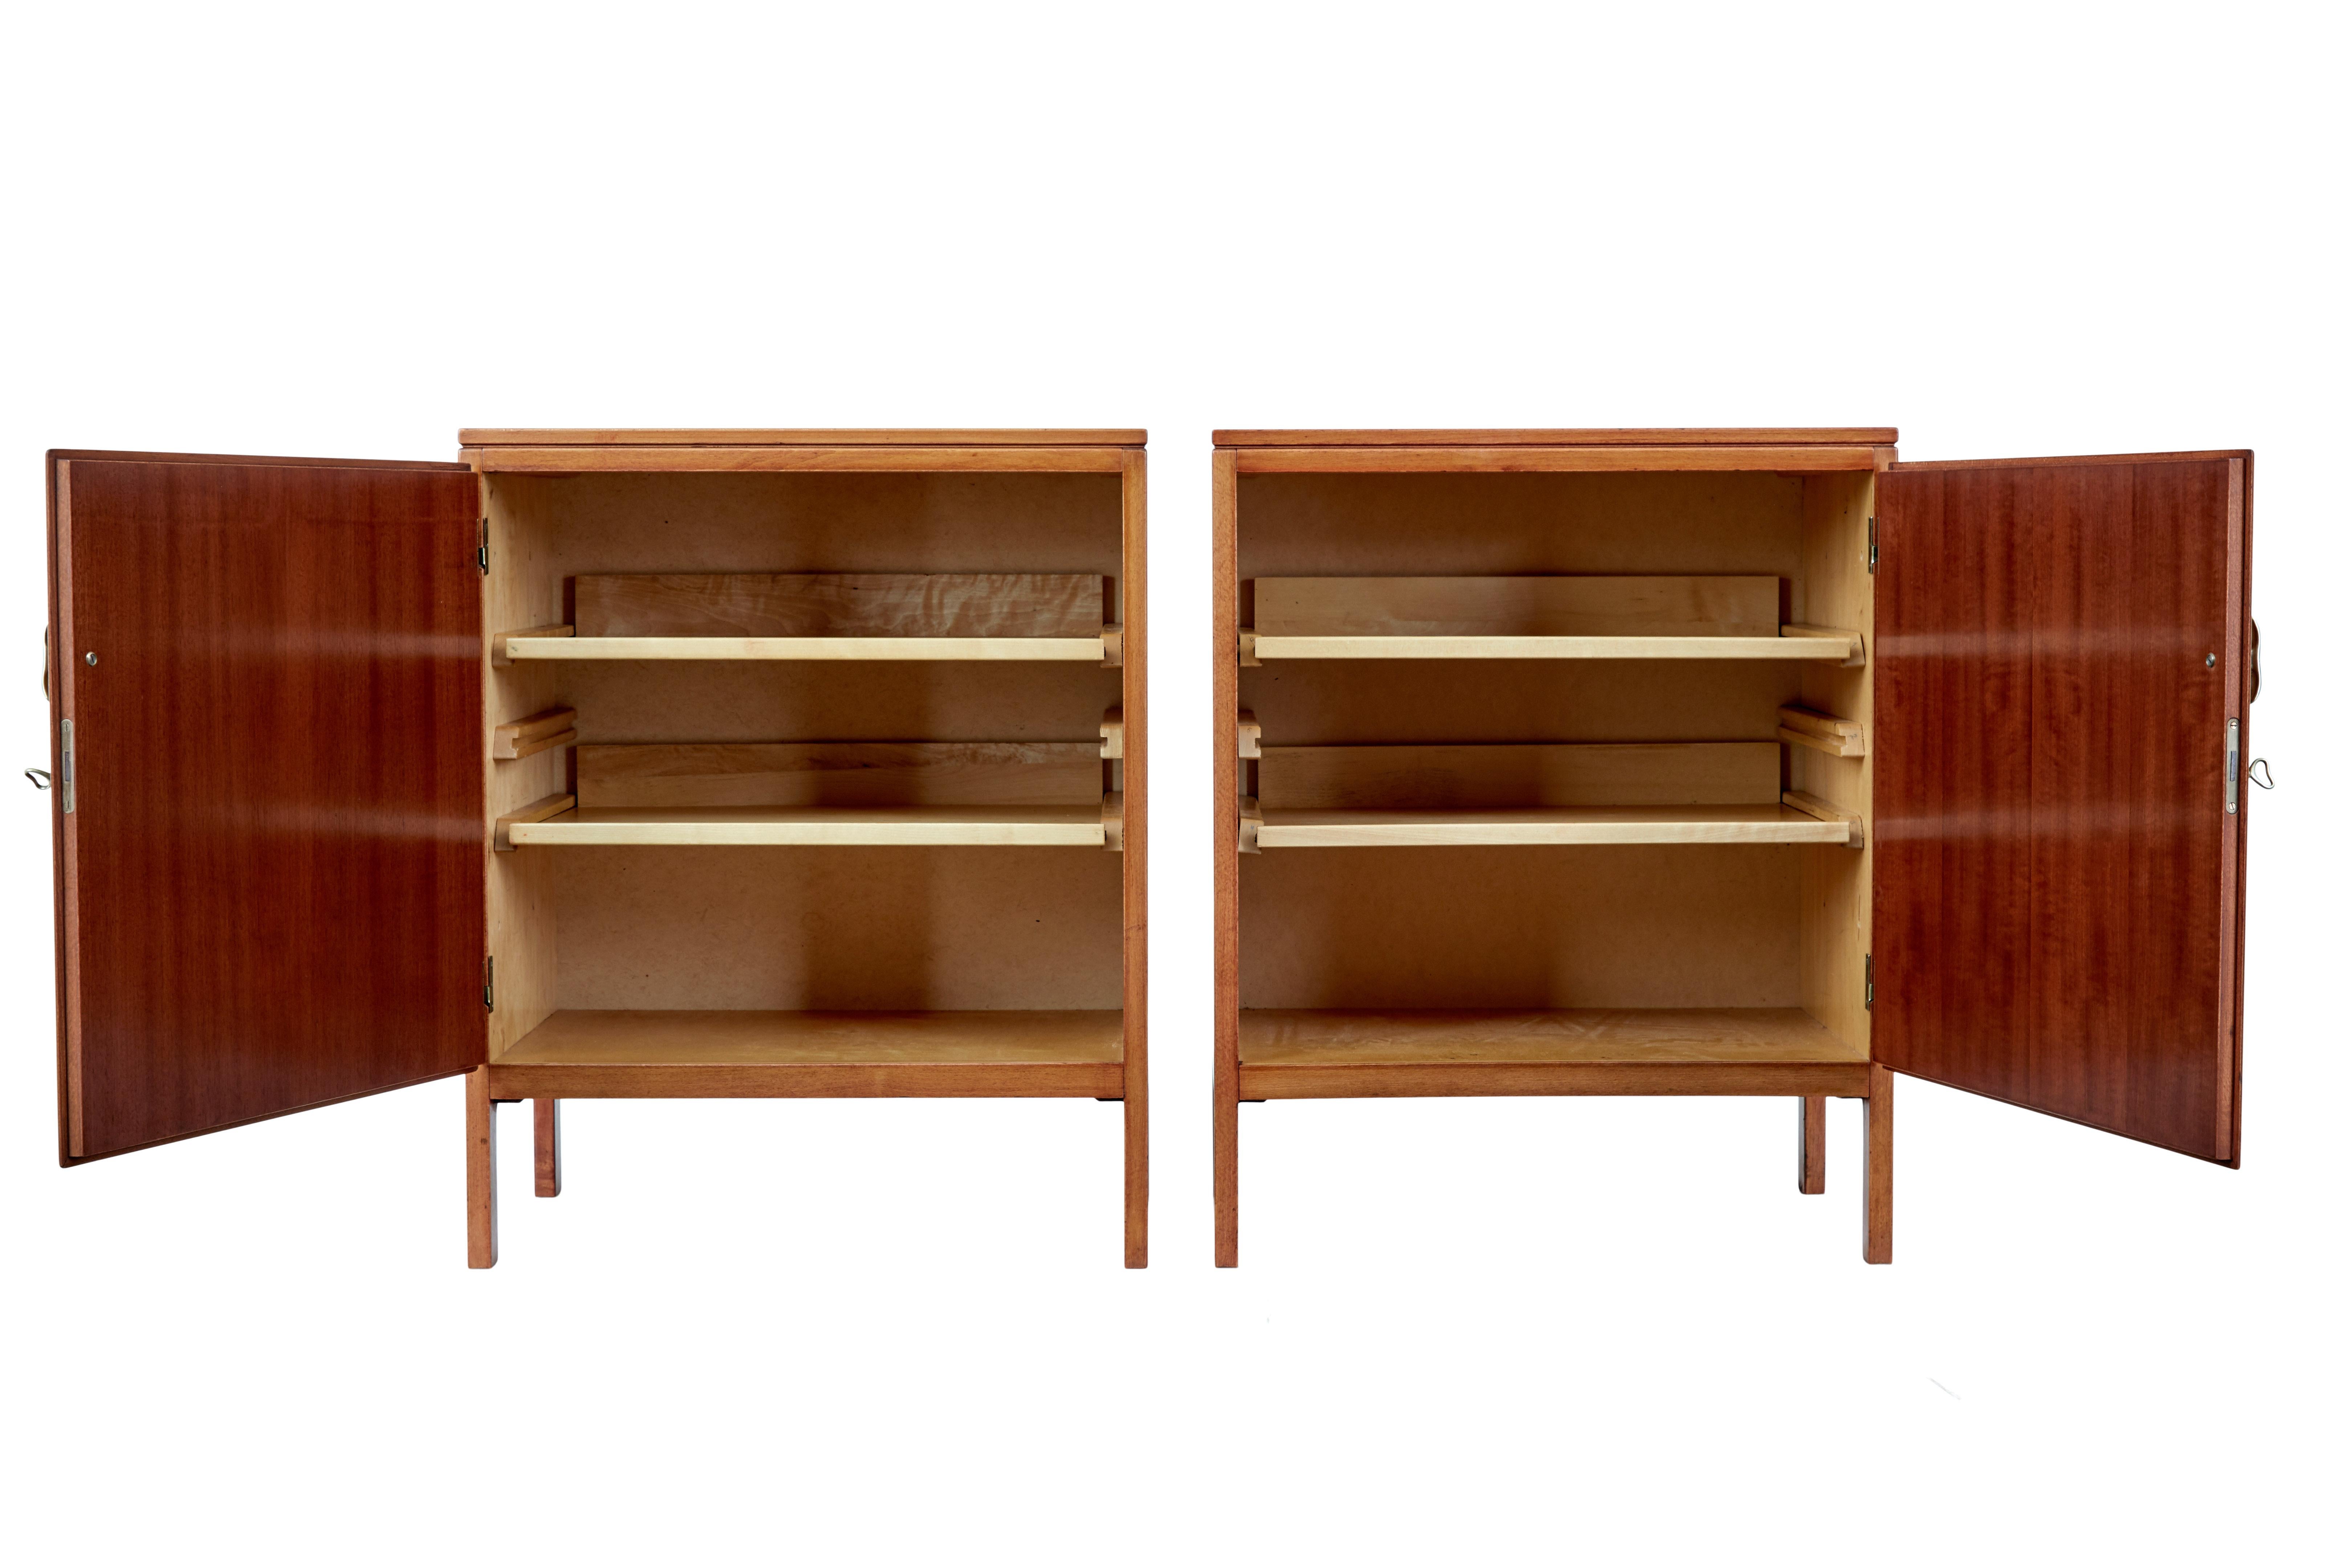 Pair of David Rosen 1950s mahogany cabinets for nordiska kompaniet circa 1955.

Designed by Swedish designer David rosen (1910-1993), Rosen was a well respected designer and was at his peak during the 1950's modern movements.

This pair of